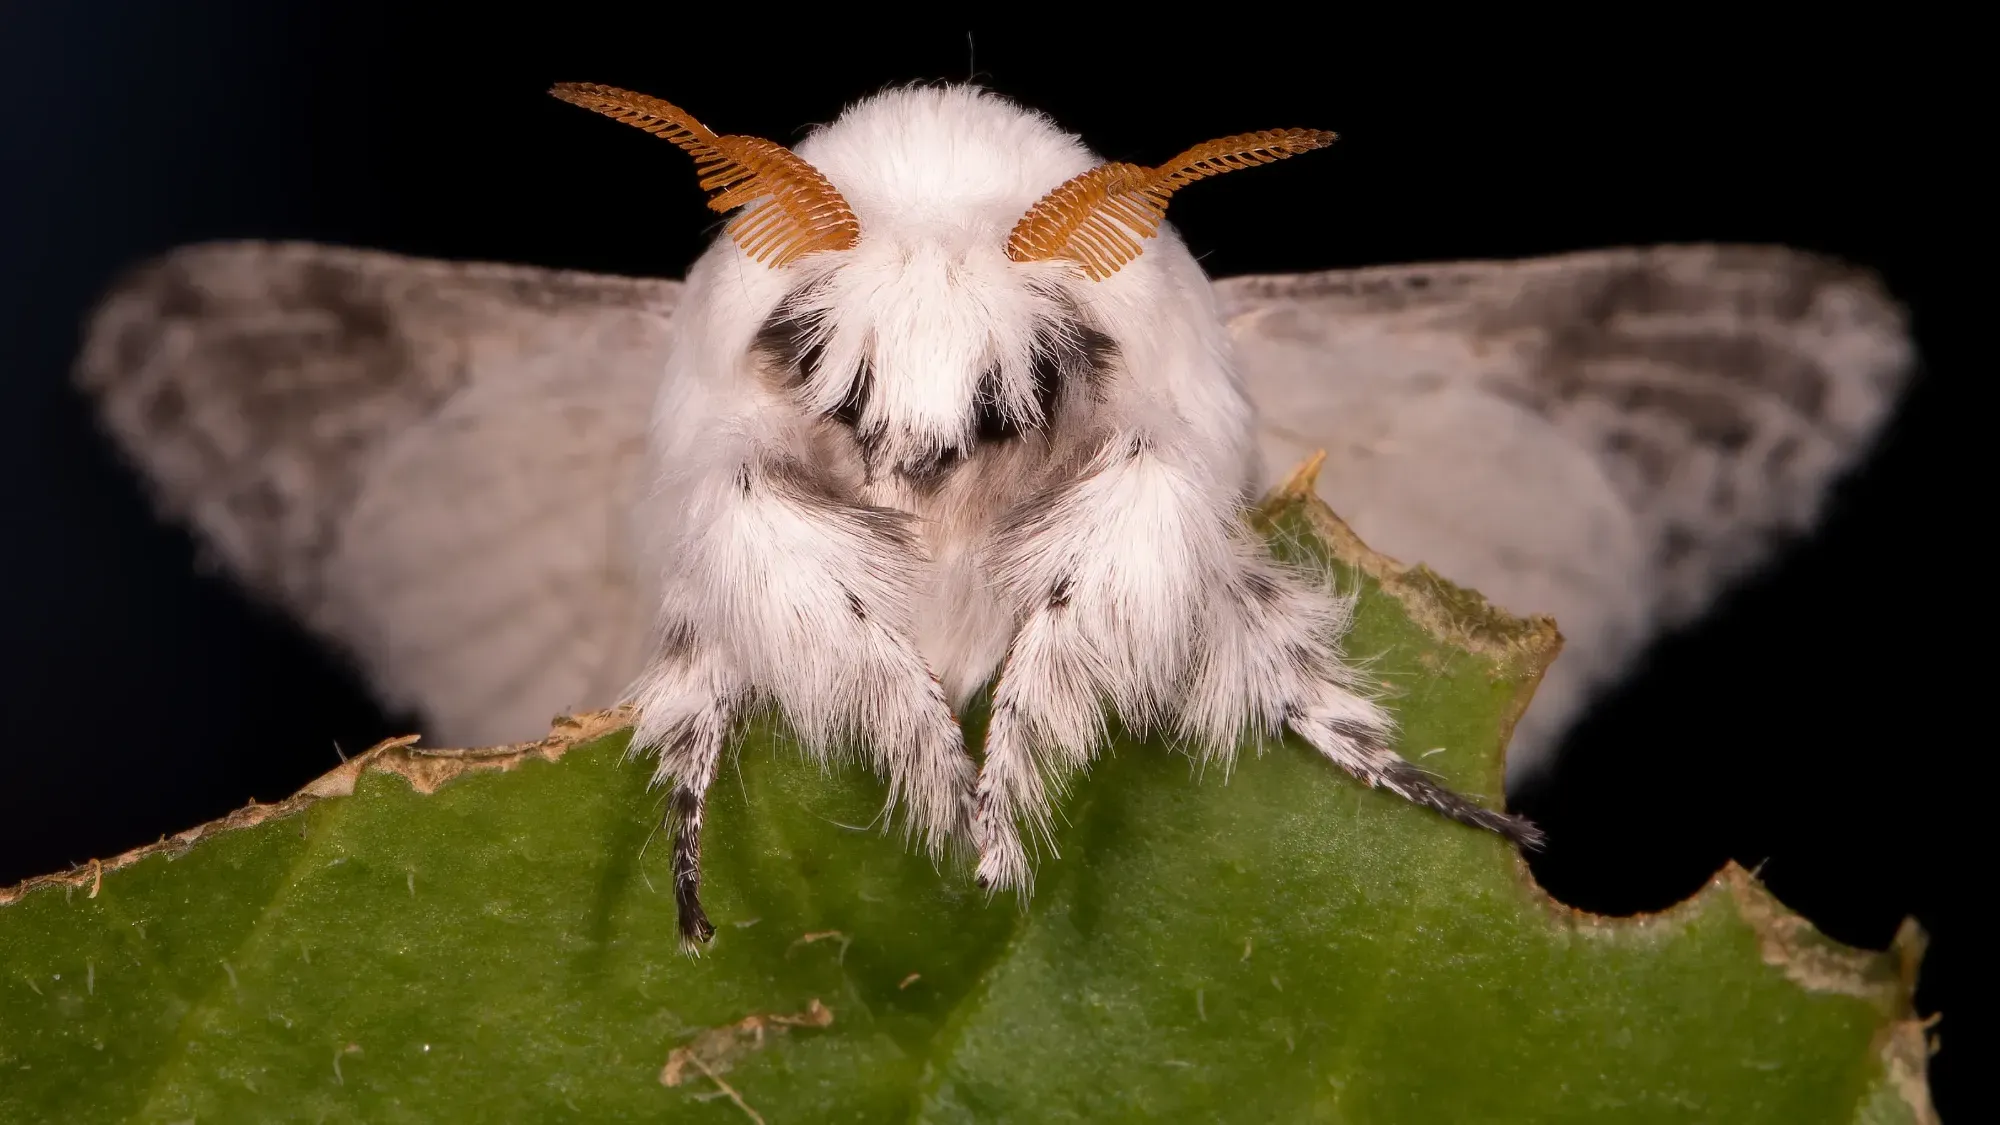 Avatar of Luna the Moth